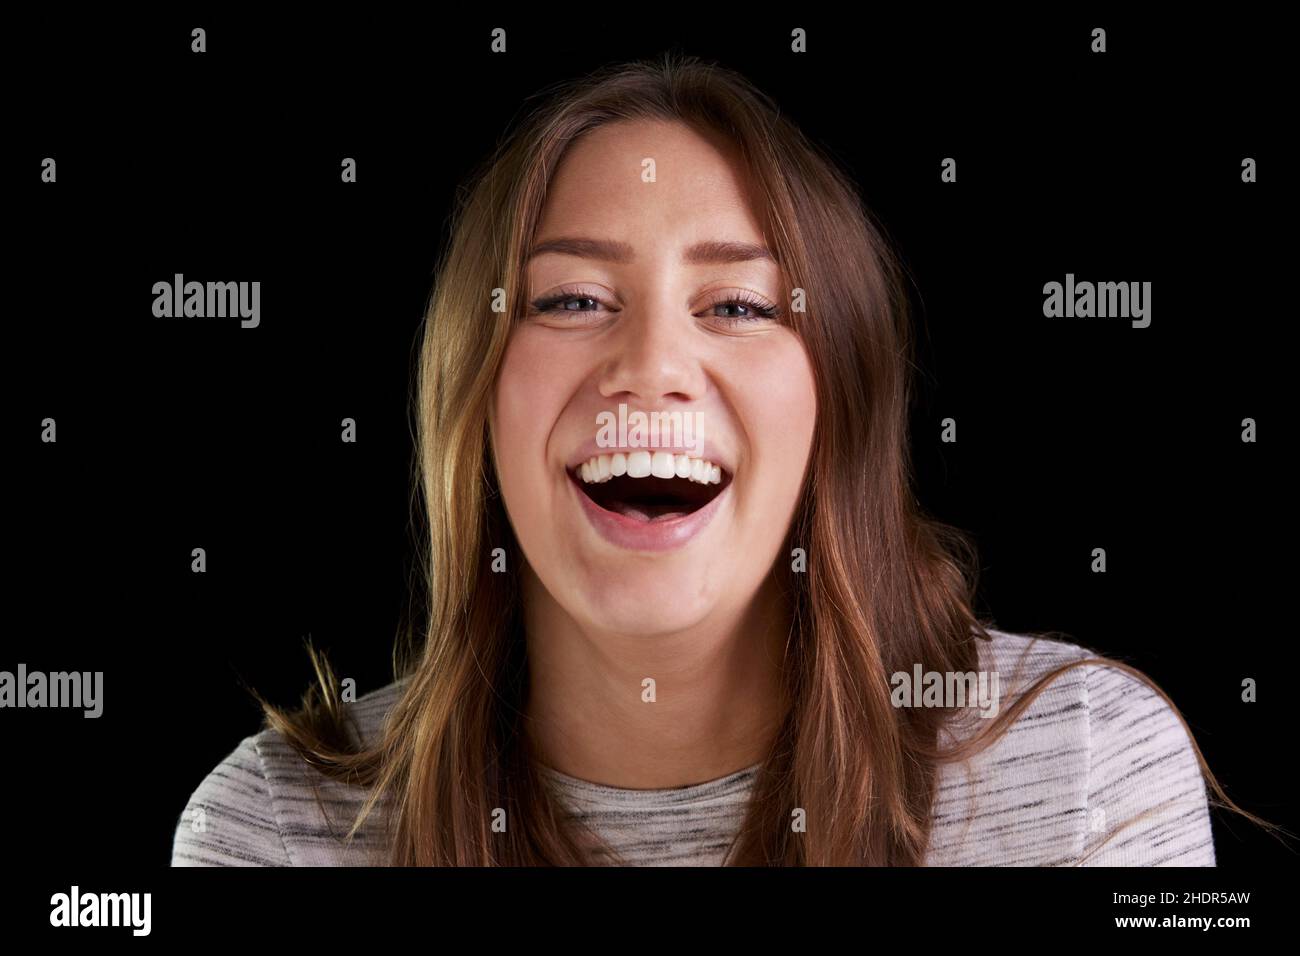 young woman, laughing, humorous, girl, girls, woman, young women, laugh, smiling, humor Stock Photo